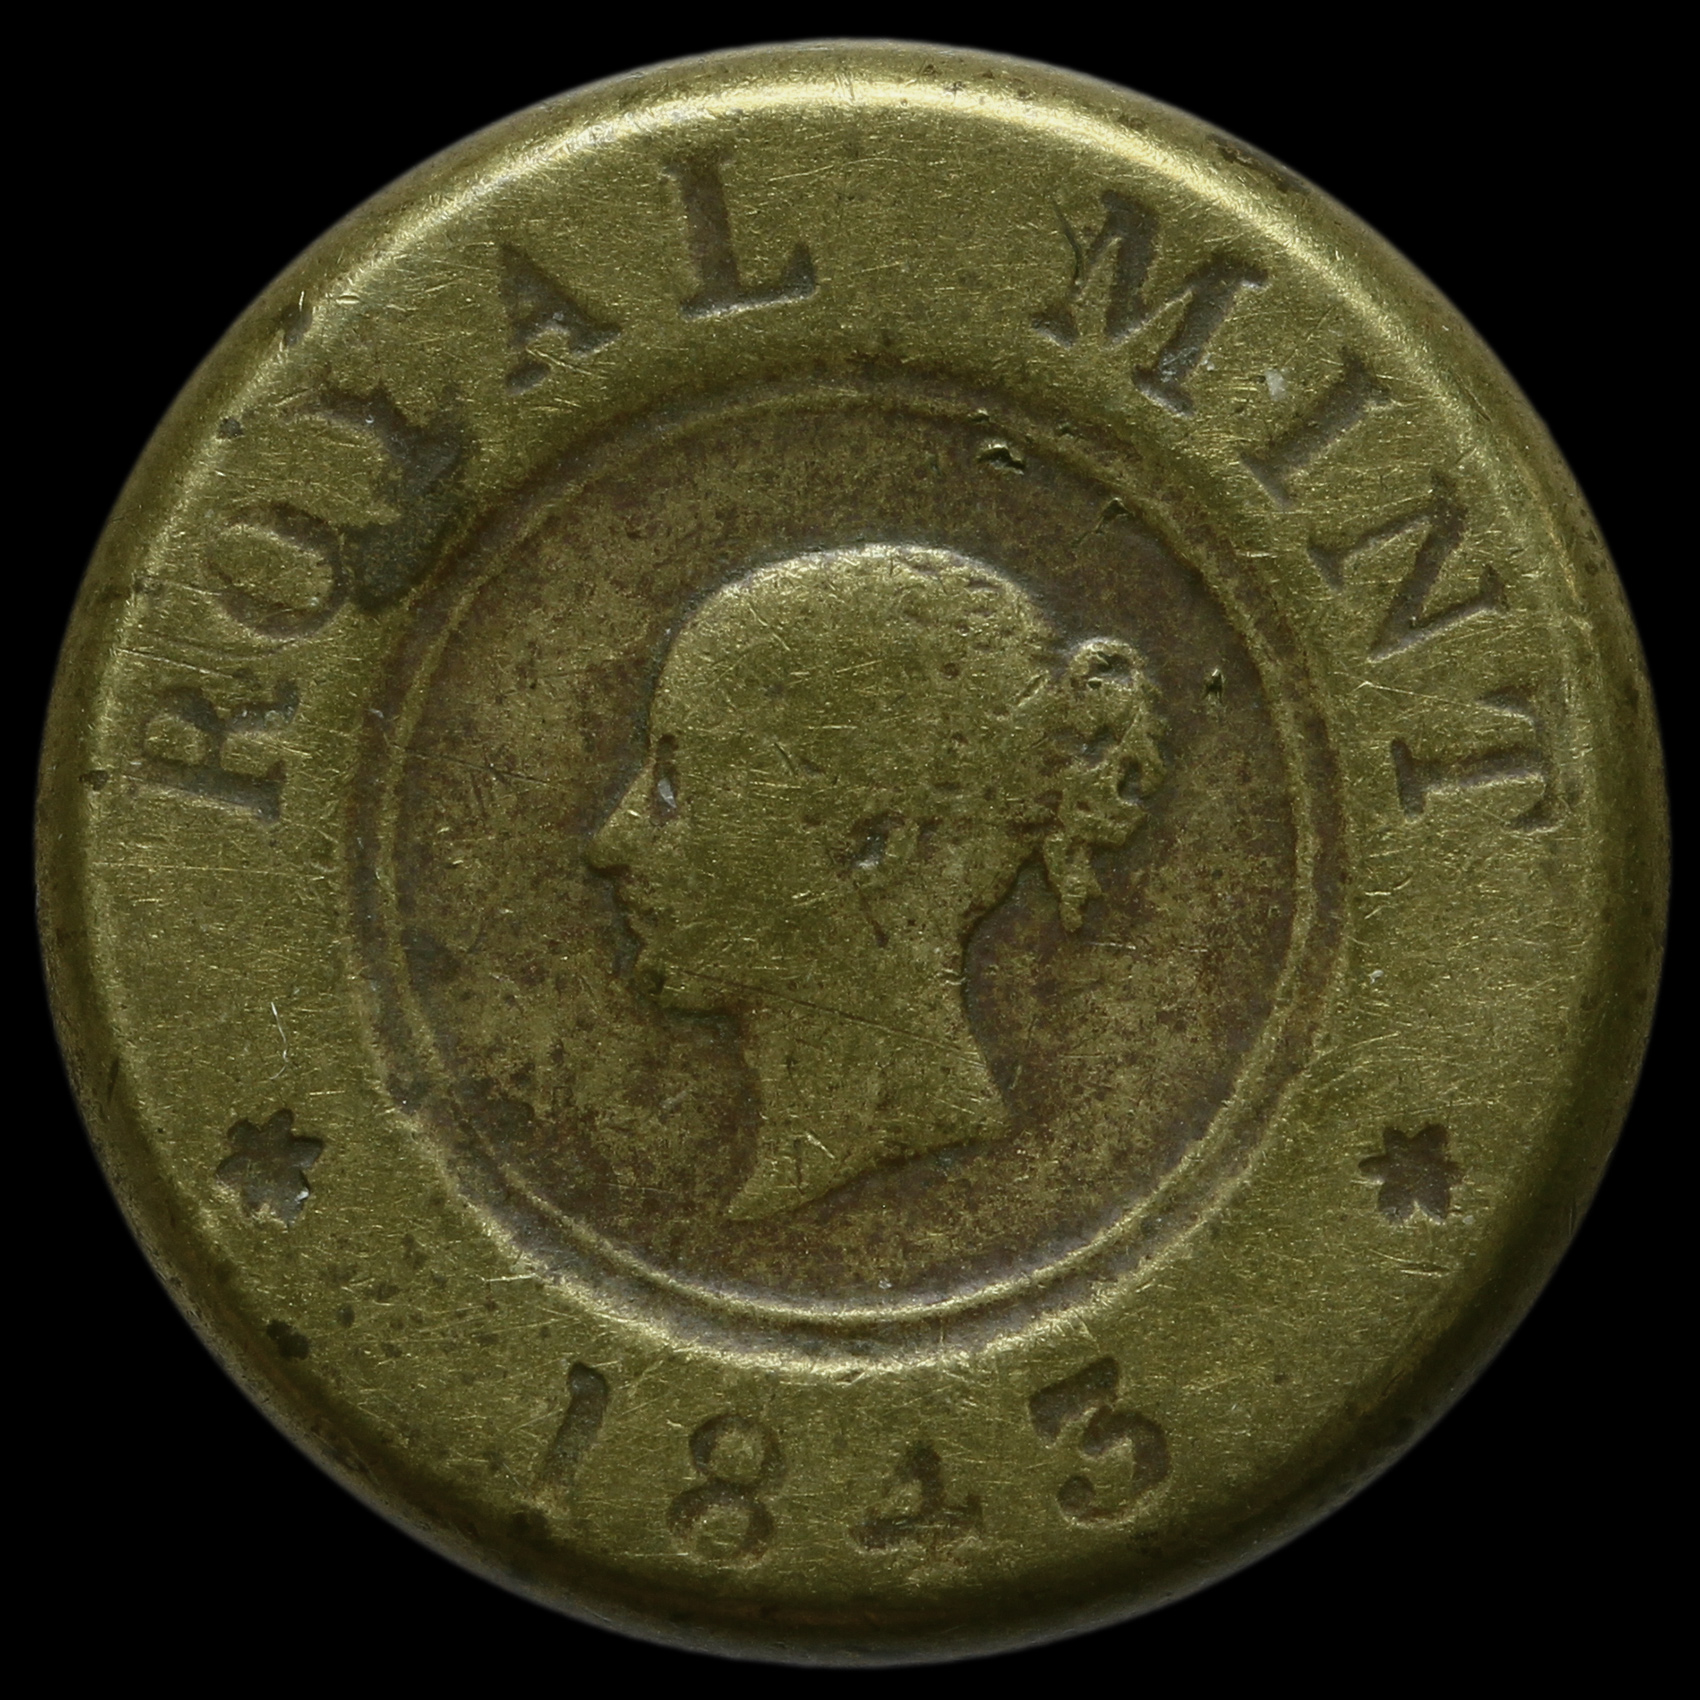 1843 Sovereign Royal Mint Queen Victoria Brass Coin Weight 